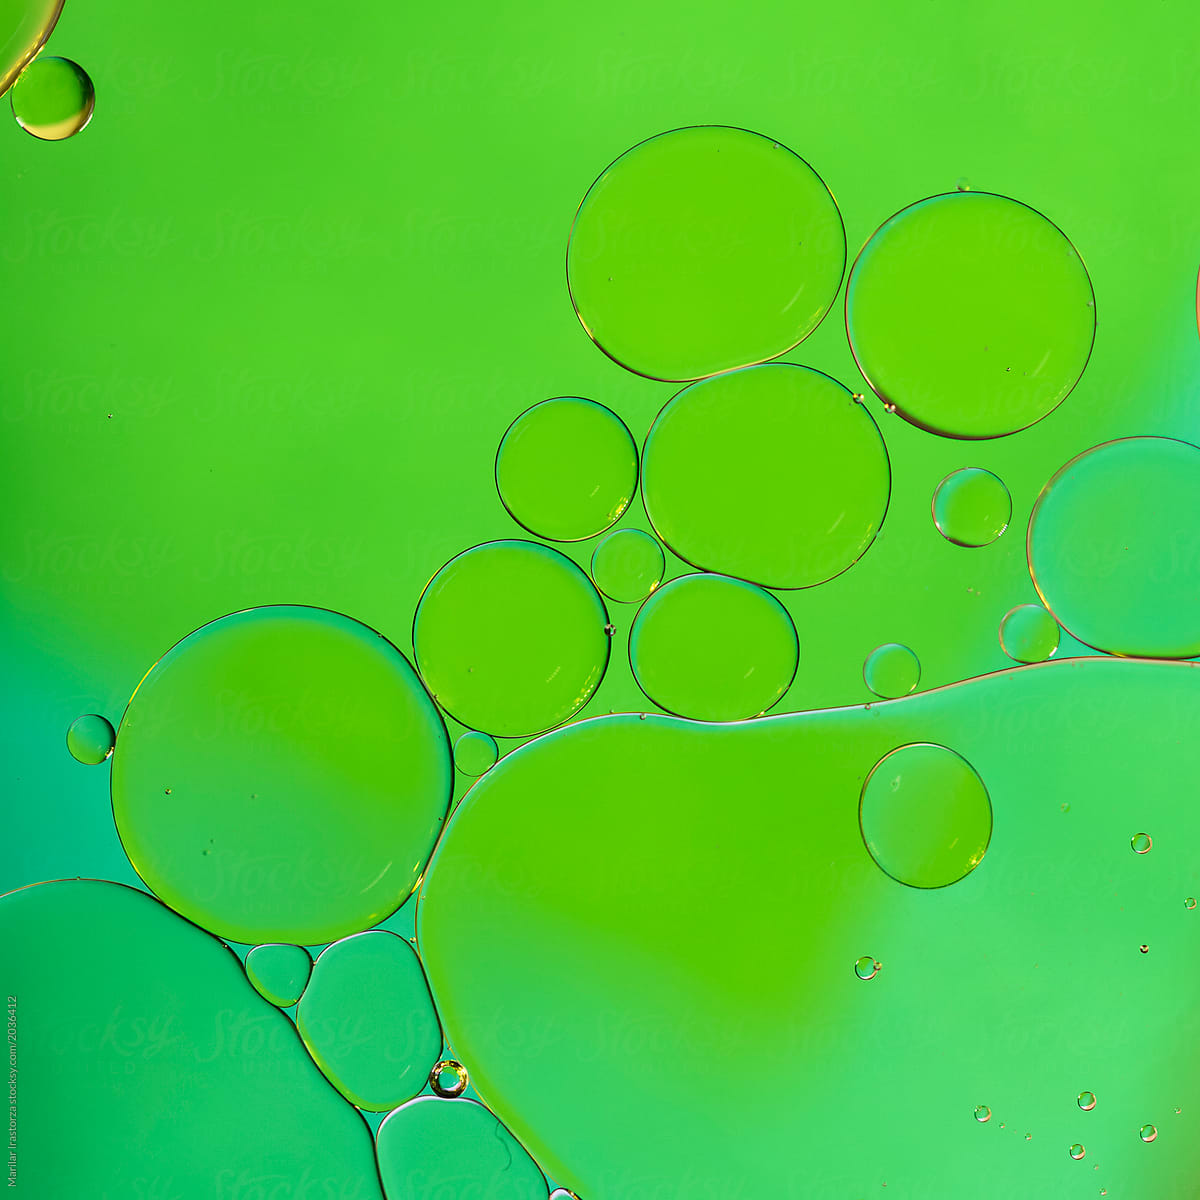 Oil droplets